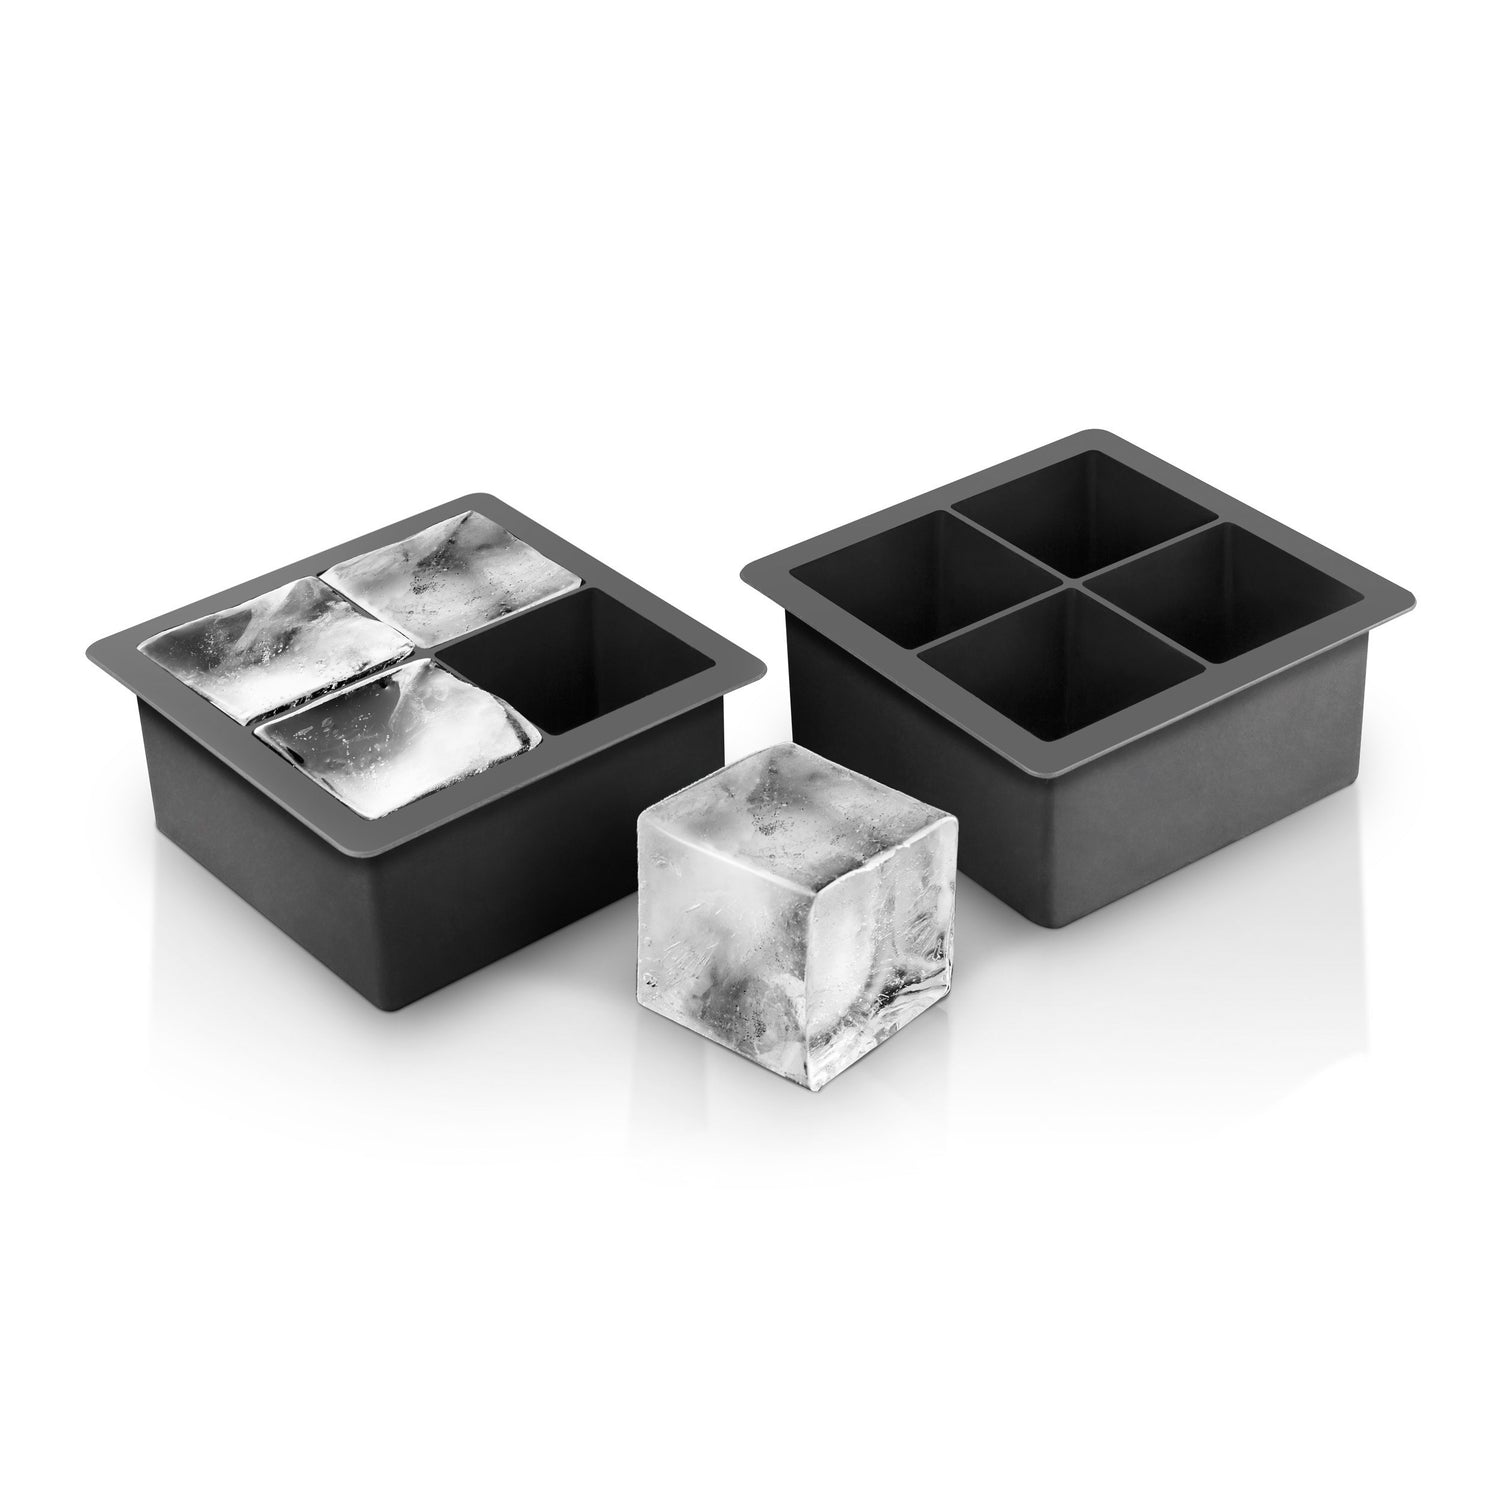 2 Extra-Large 4 Cube Ice Mould - Set of 2